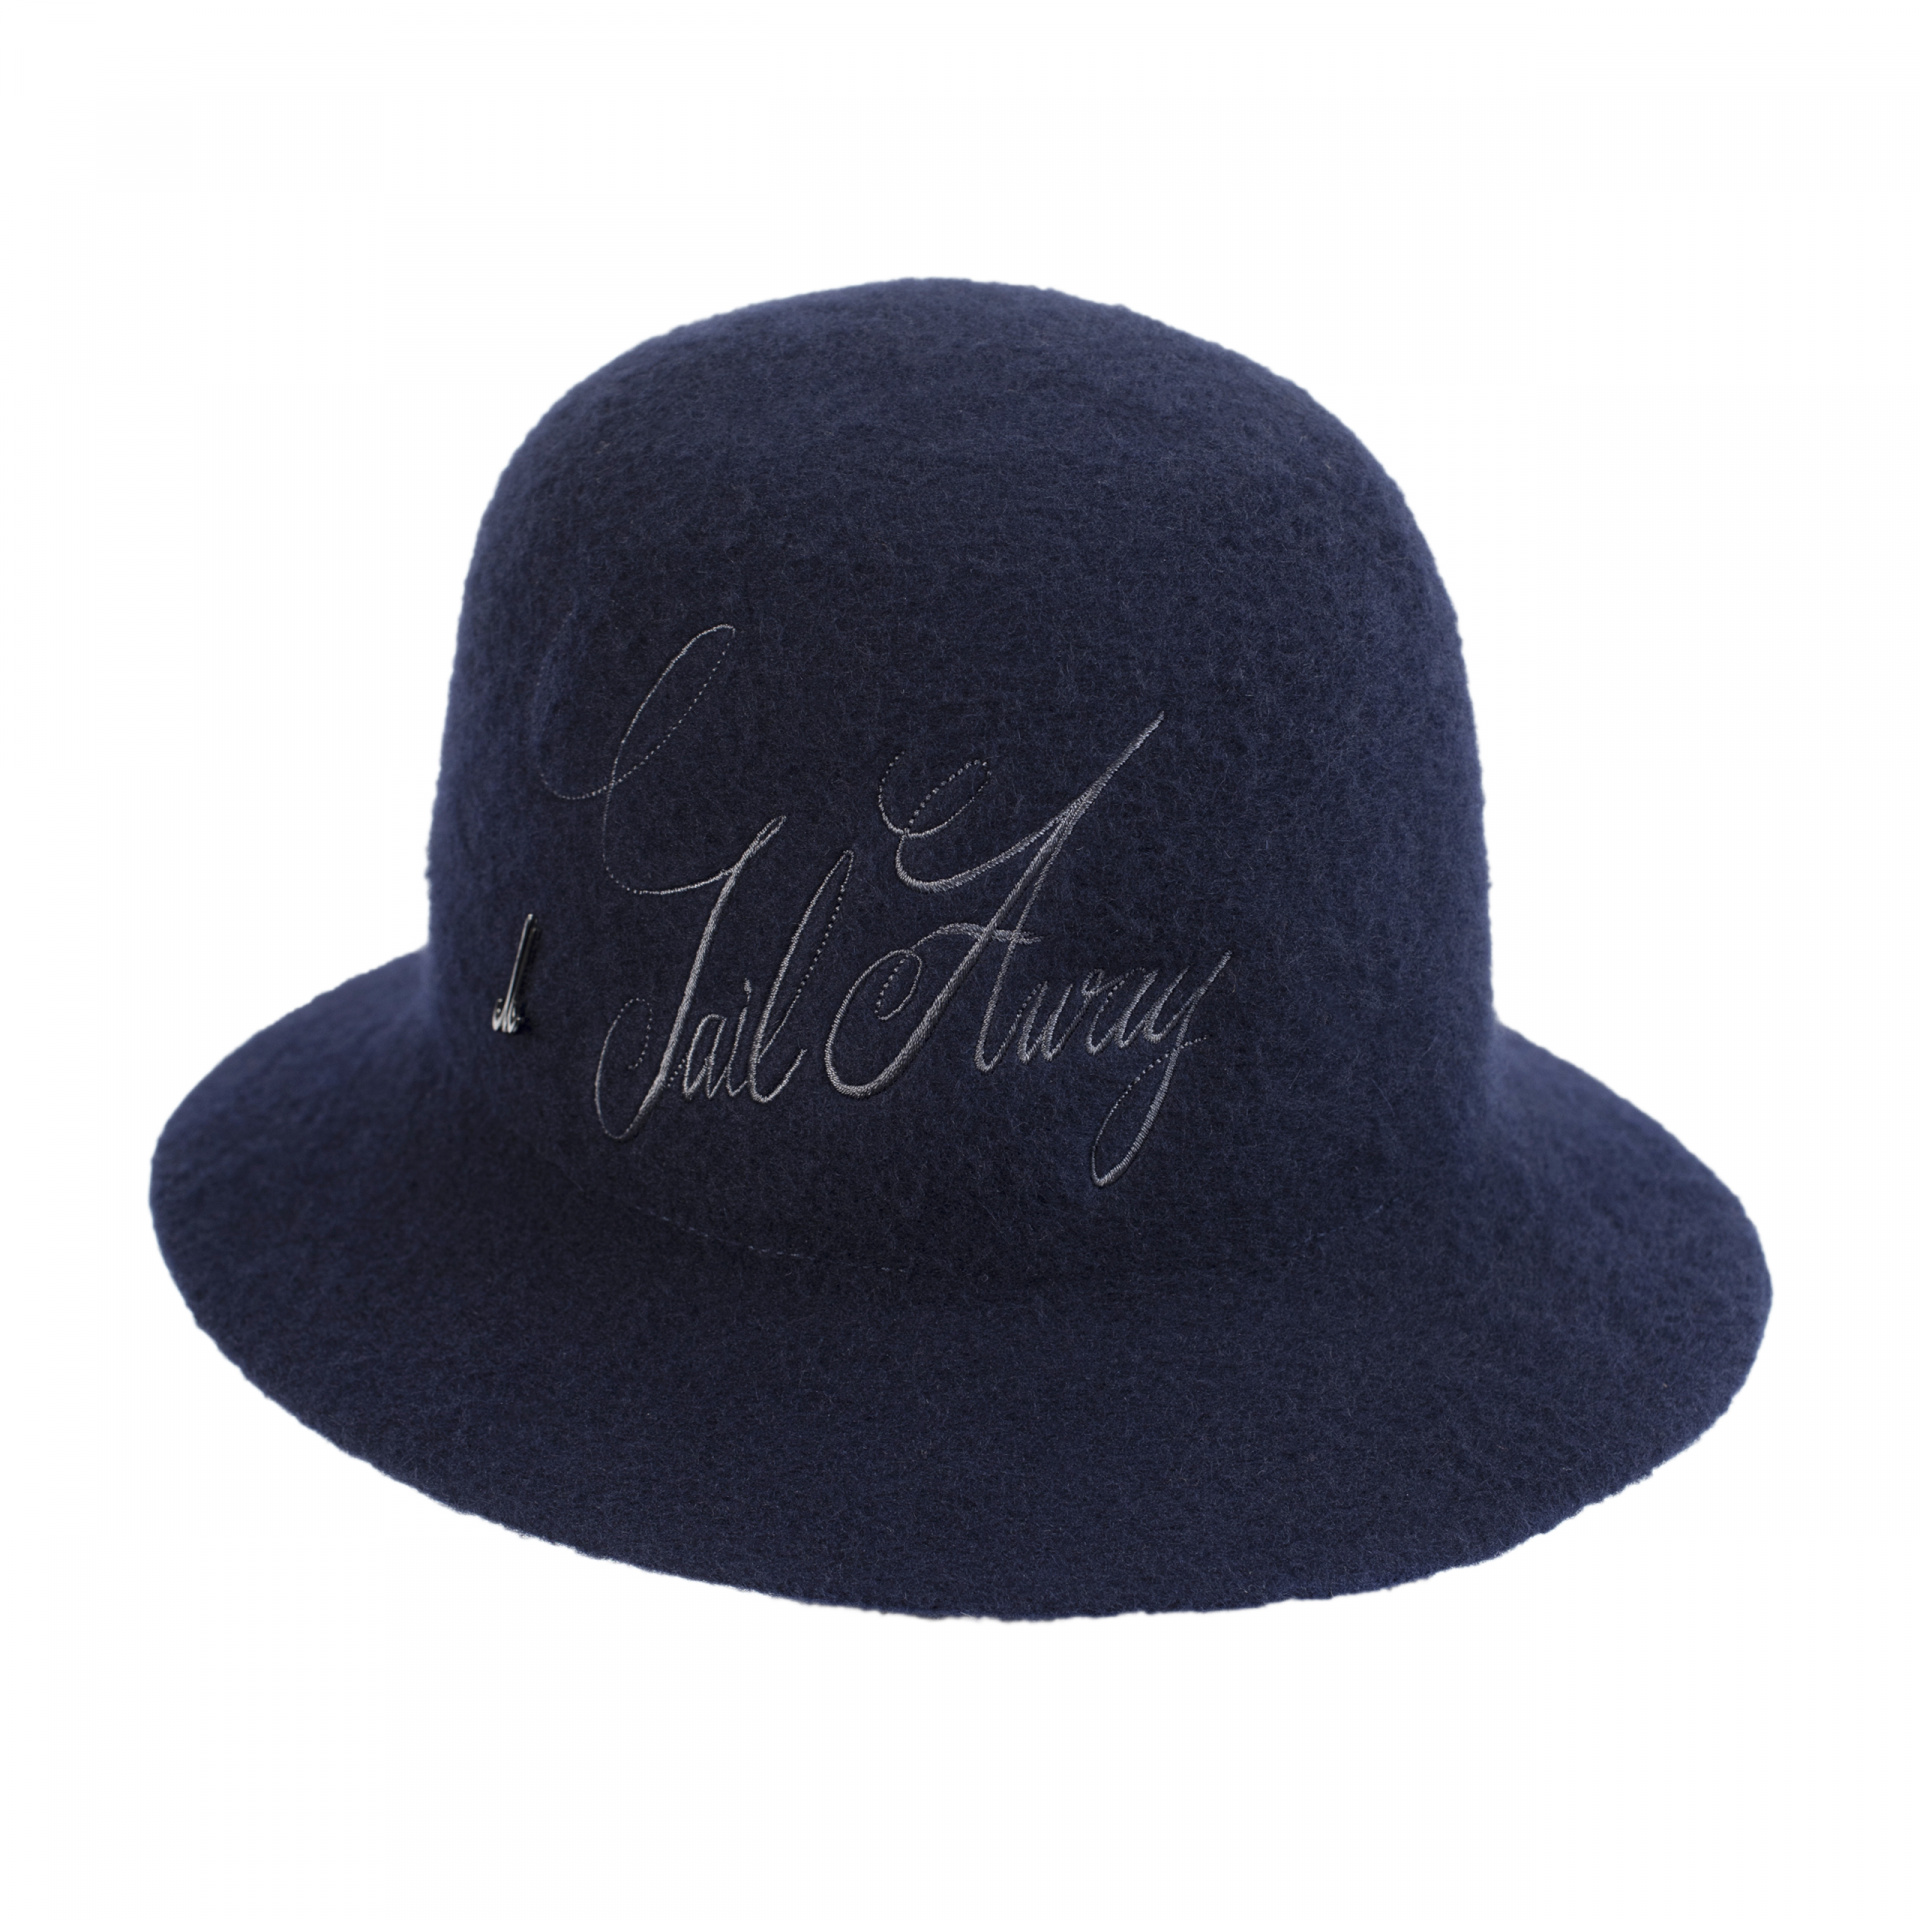 Junya Watanabe Embroidered logo hat in navy